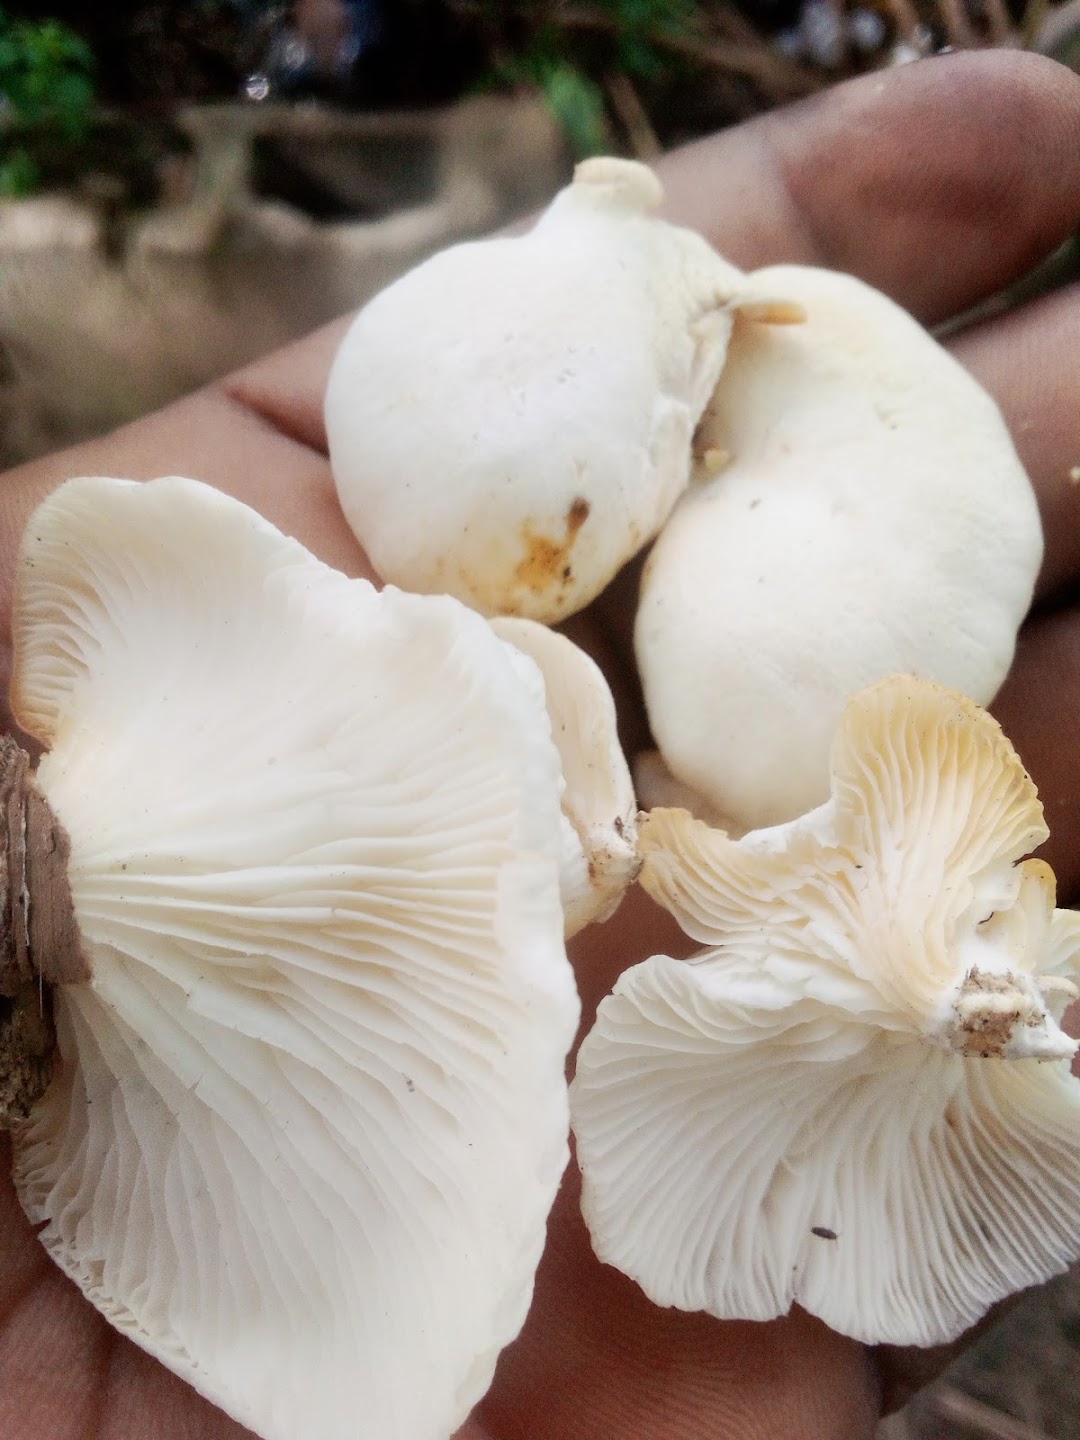 Day-makers mushroom farm